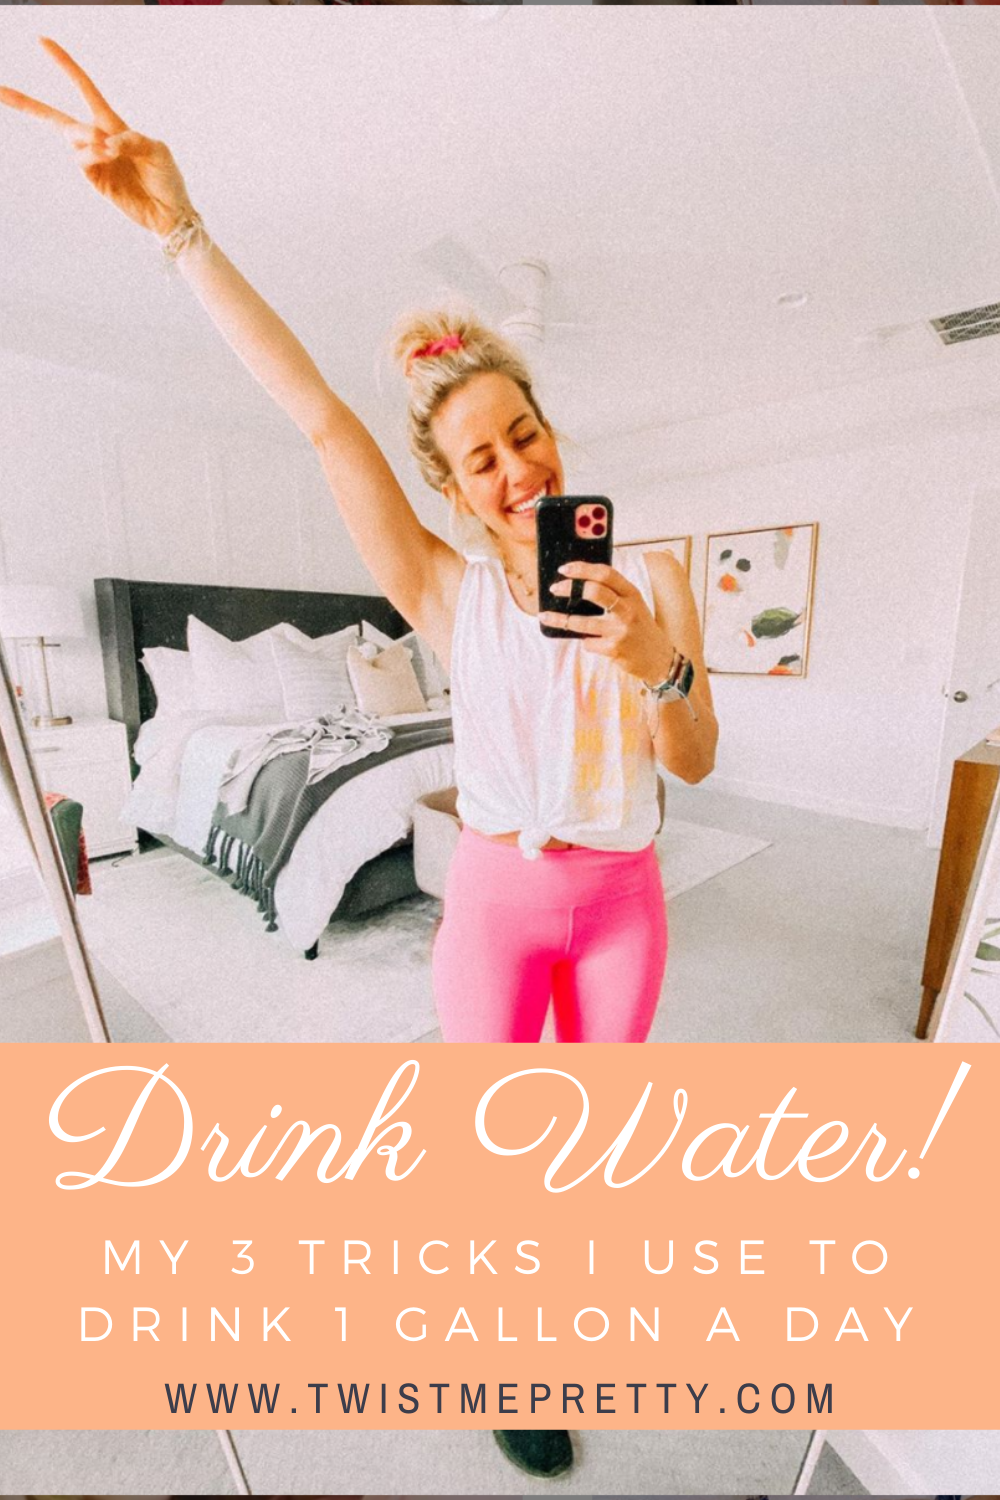 Drink water! My 3 tricks I use to drink 1 gallon a day. www.twistmepretty.com